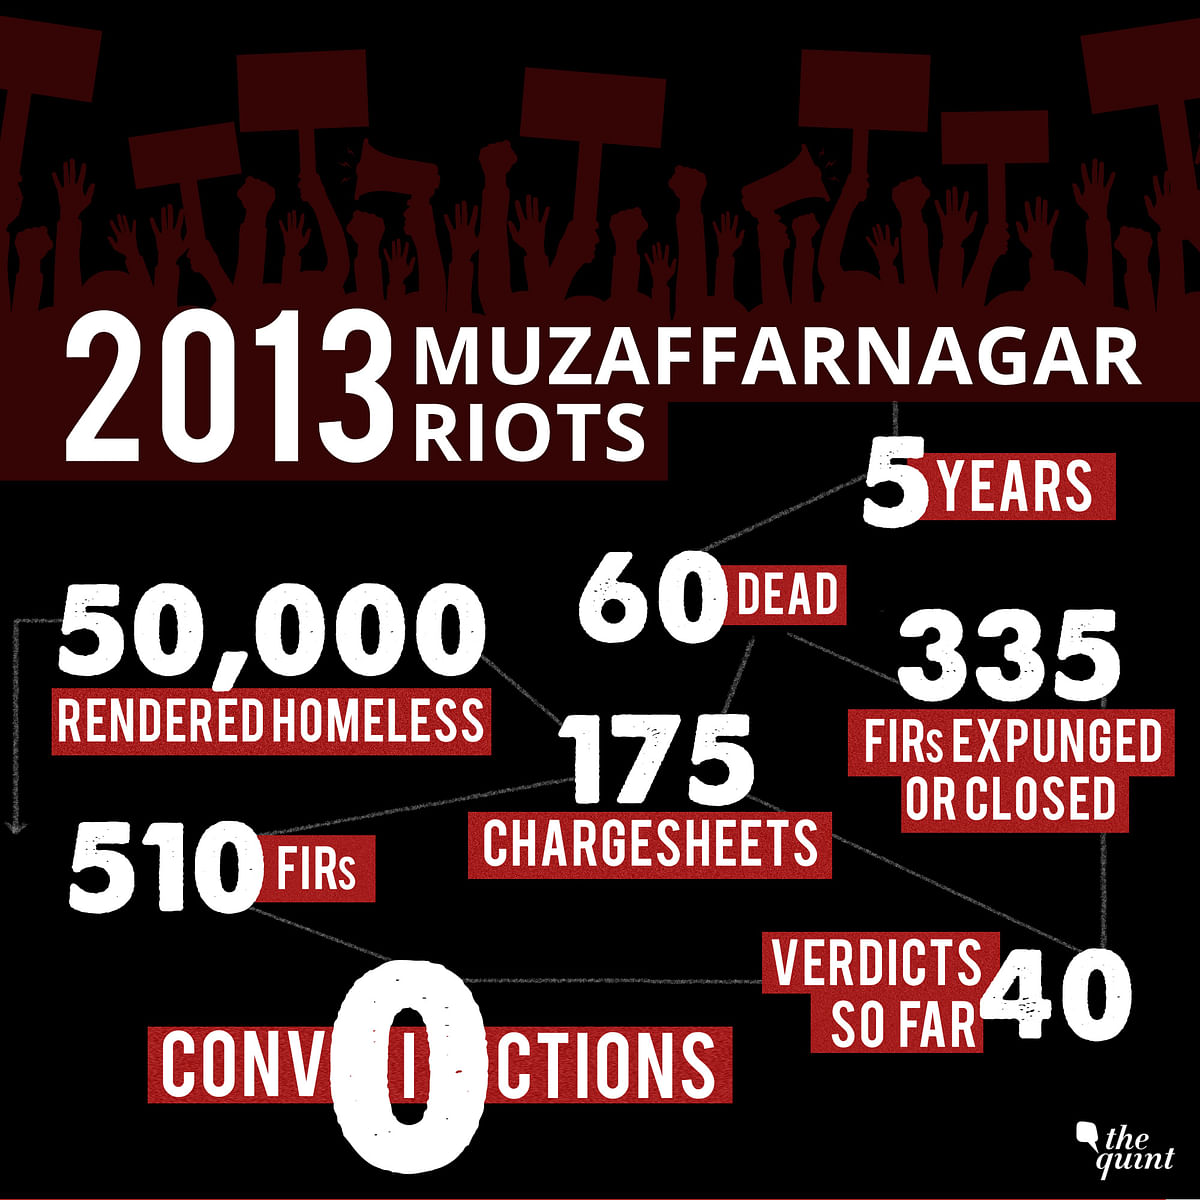 5 years, 60 killed. 50,000 homeless. A status check on the Muzaffarnagar riots cases. 